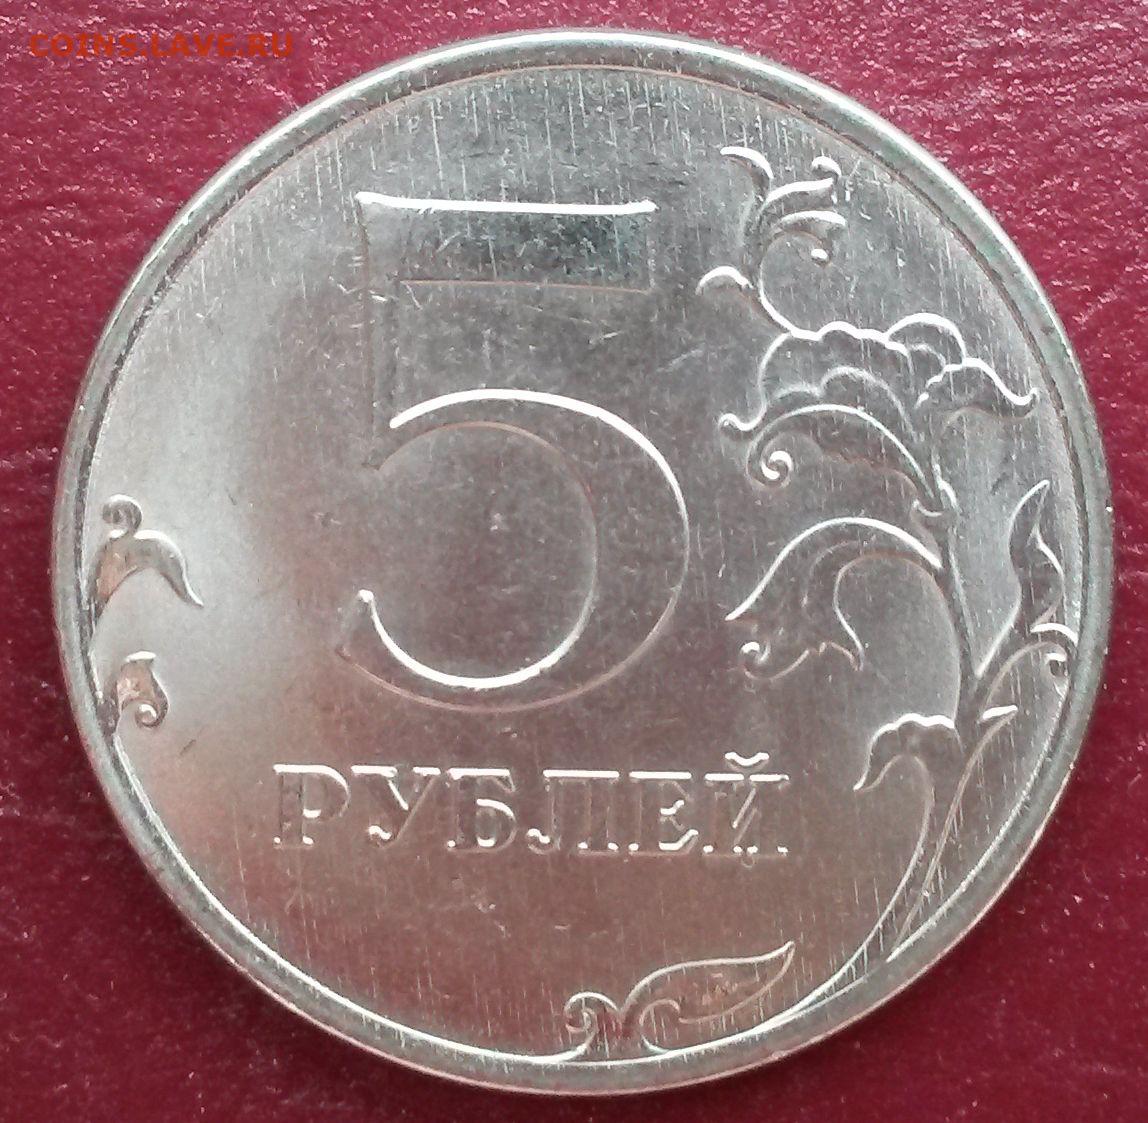 65 рублей 60. 5 Рублей 2017. 5 Рублей 1997 разновидности монеты точка средняя.